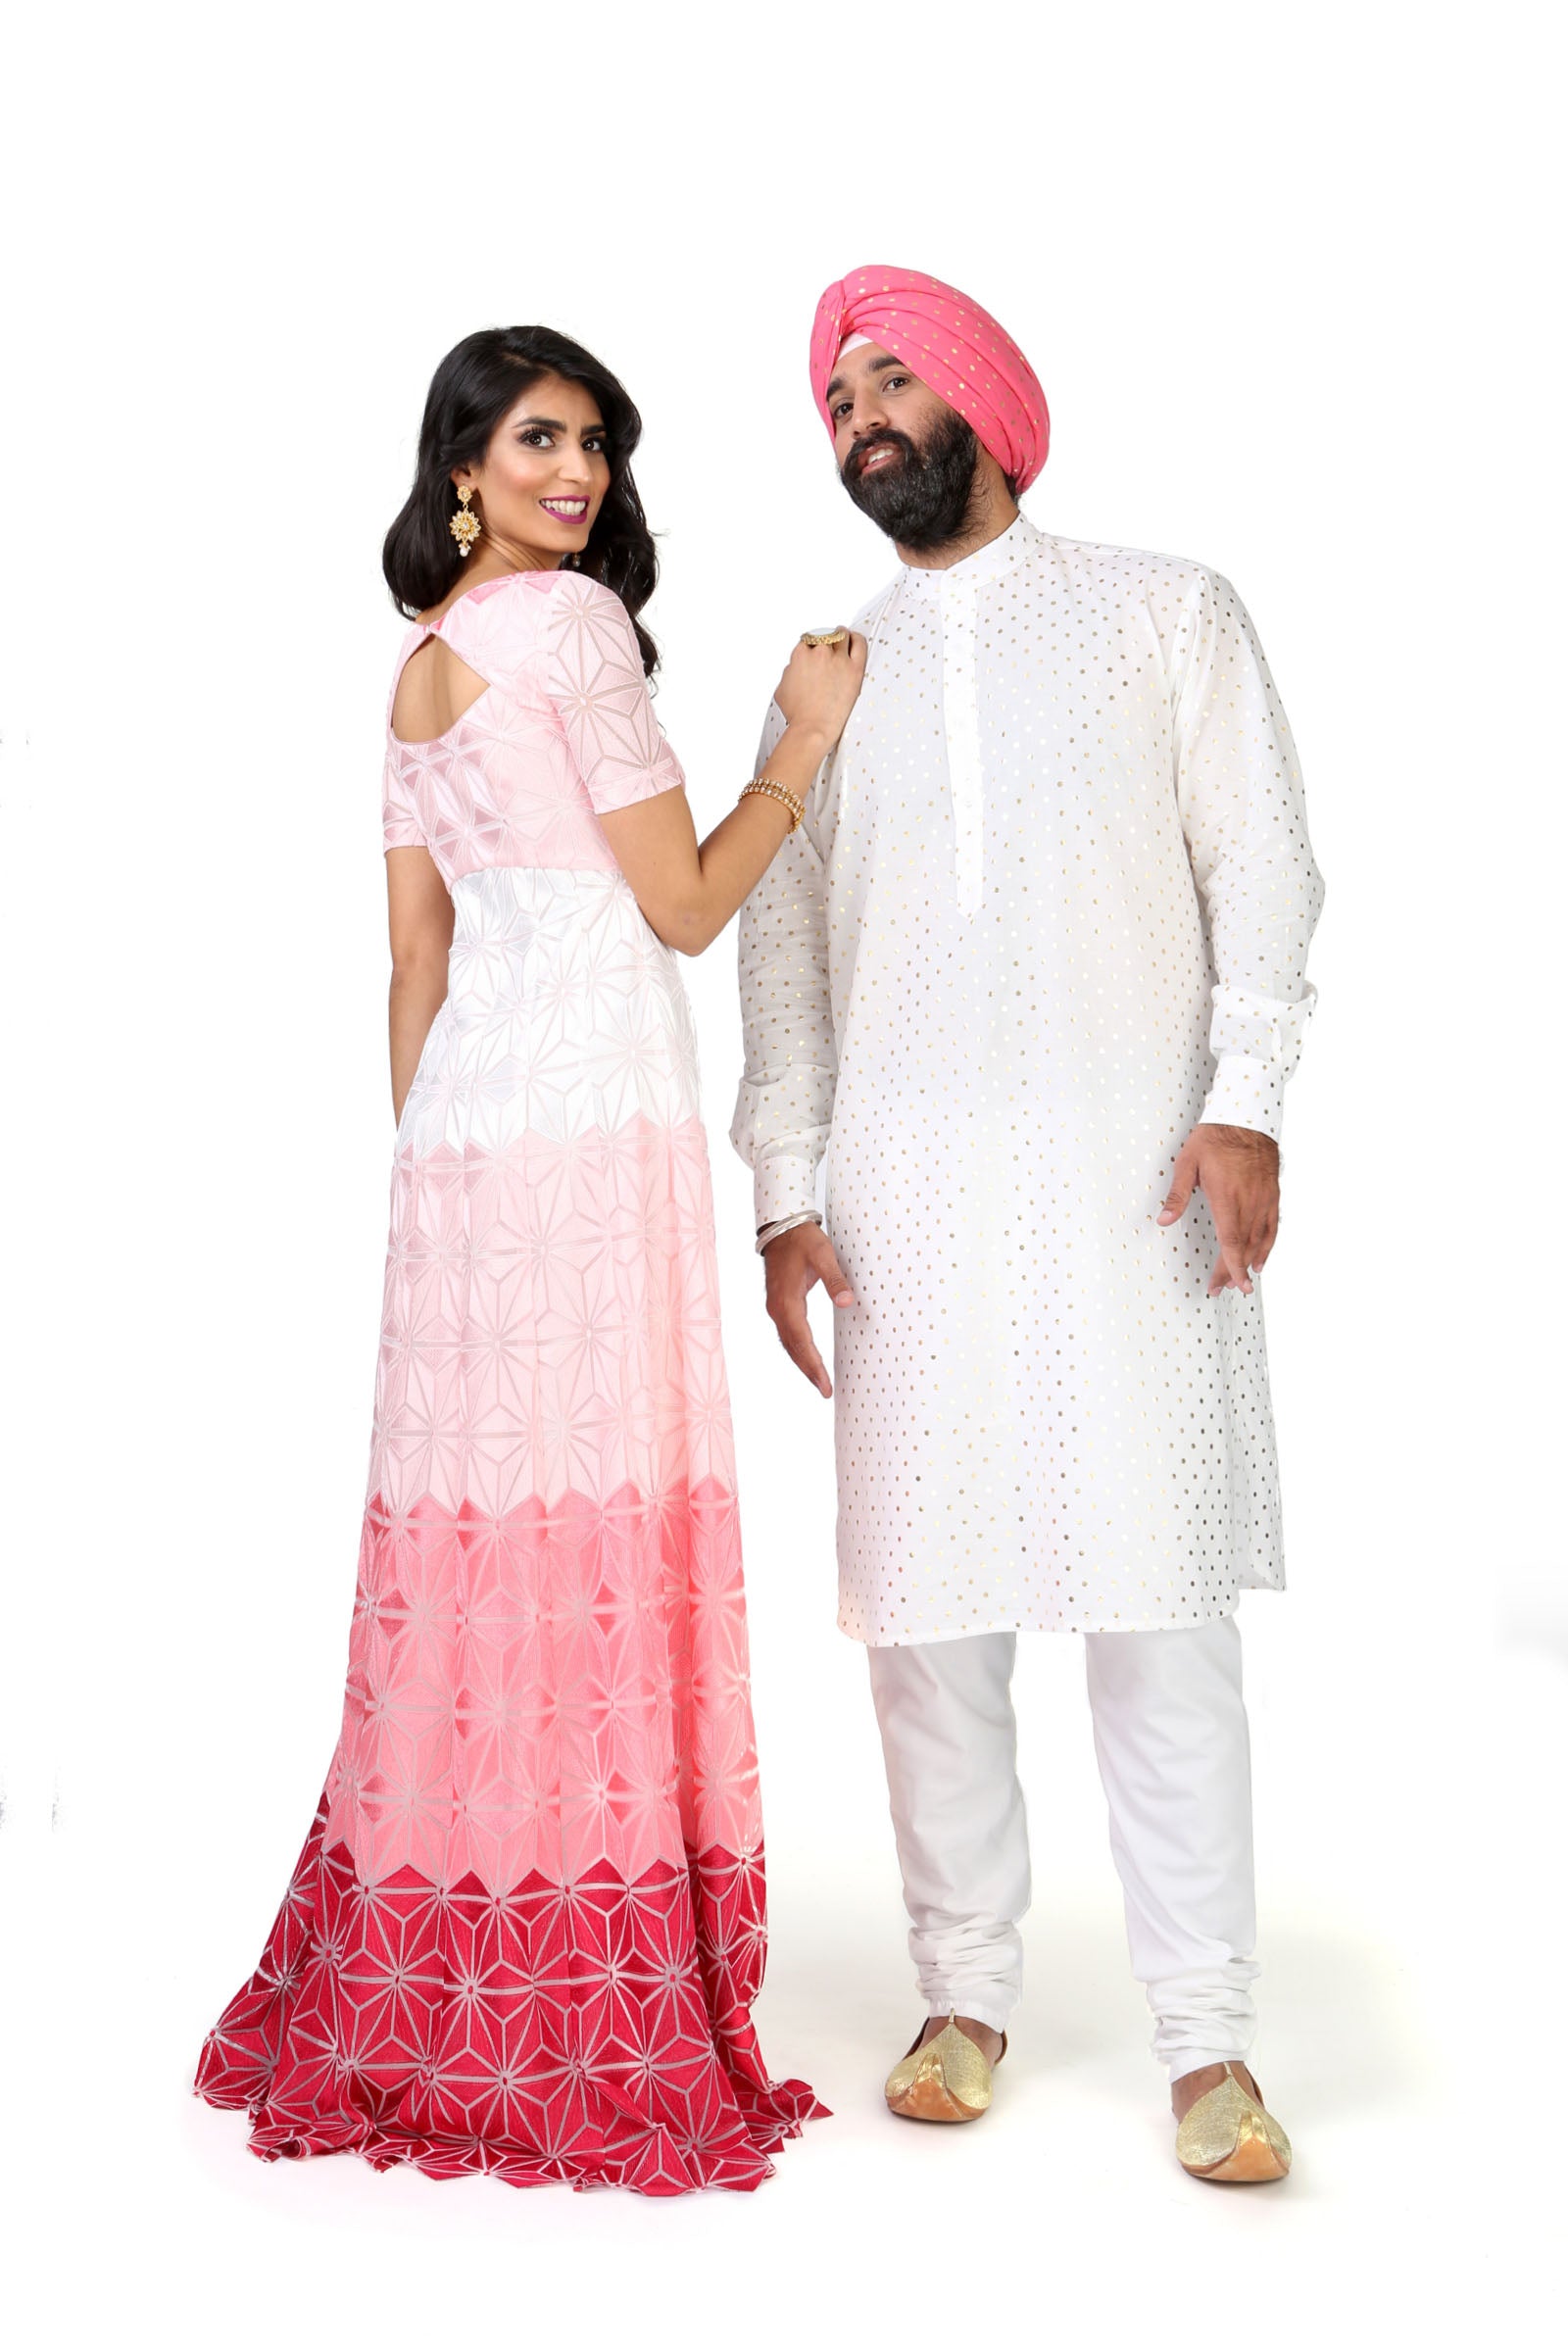 RANJA Tunic in White -  Front View - Harleen Kaur - Cotton Menswear